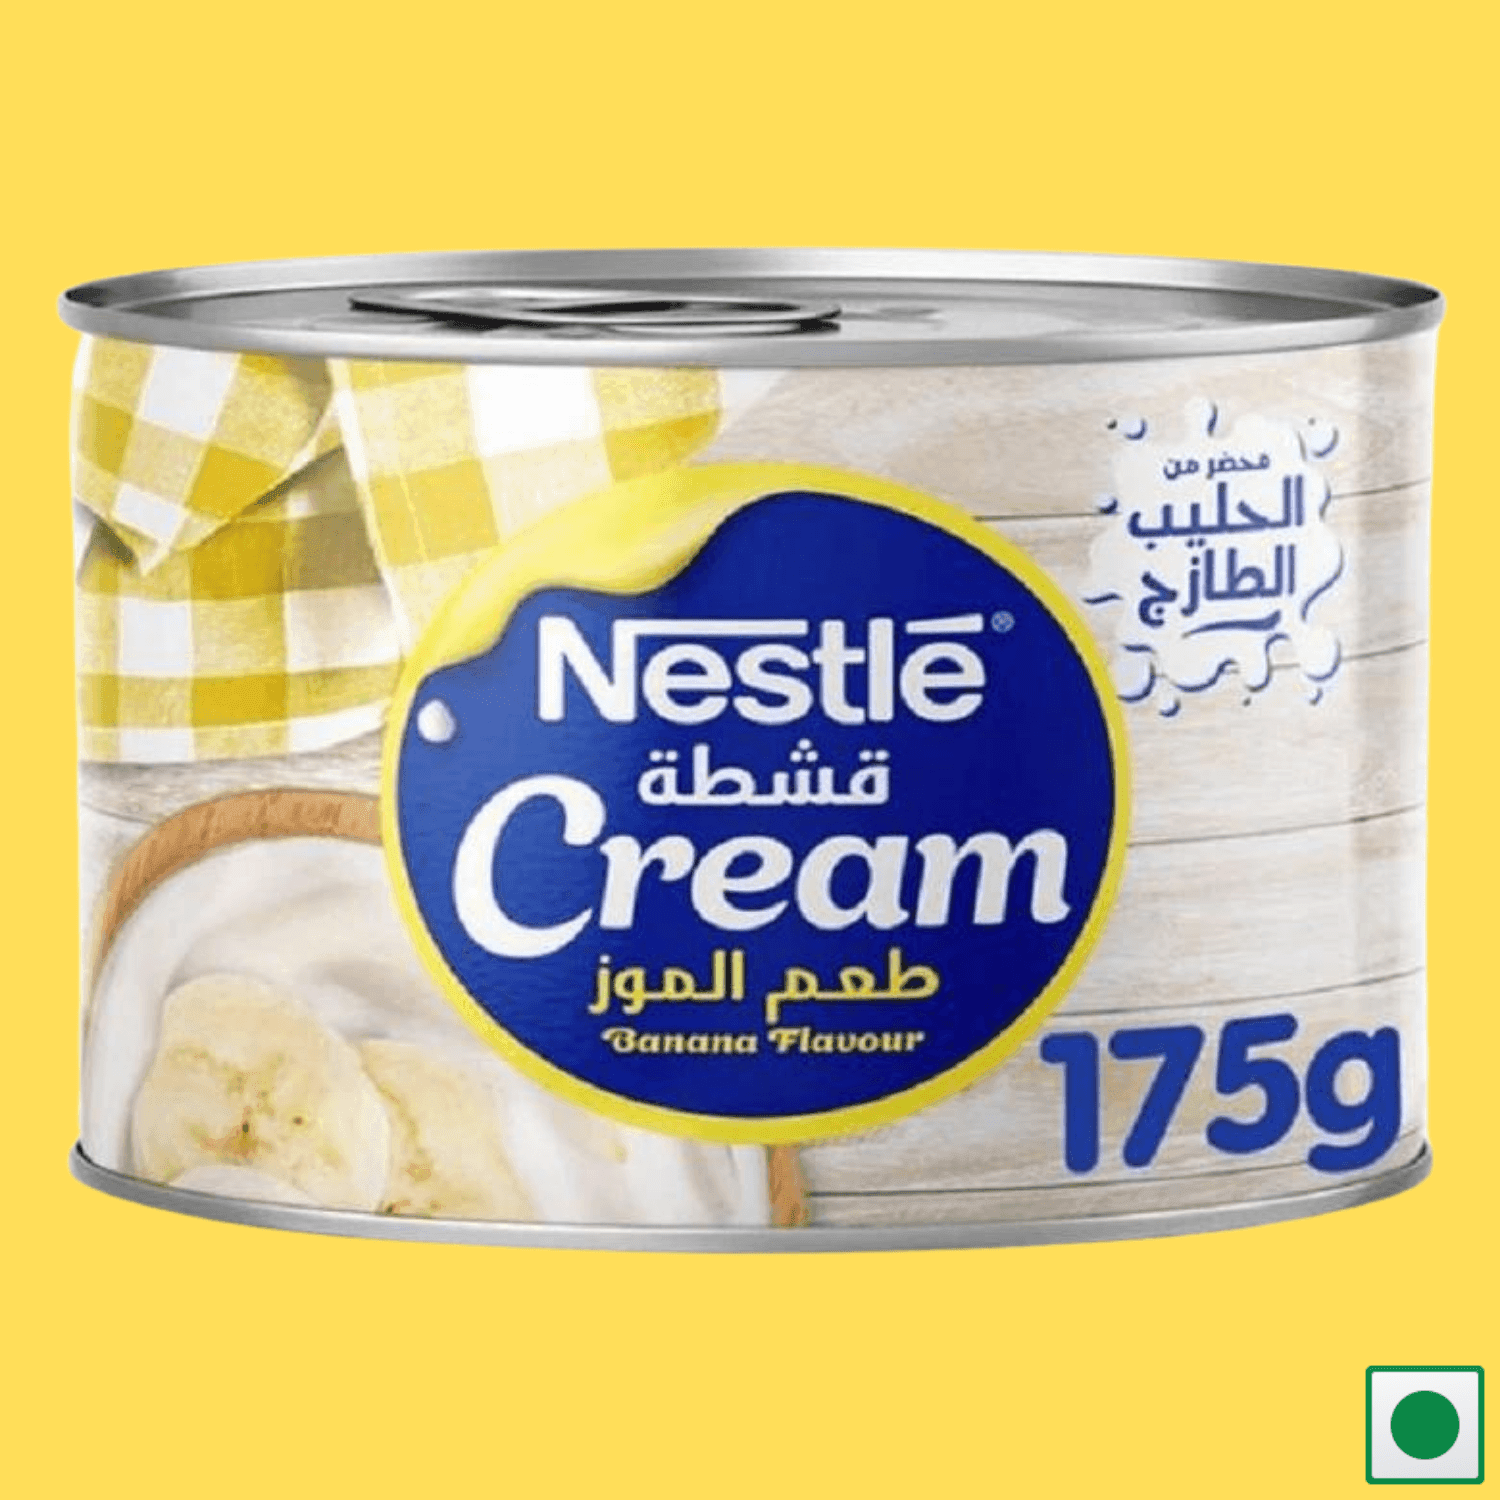 Nestle Banana Flavour Cream, 175g (Imported) - Super 7 Mart